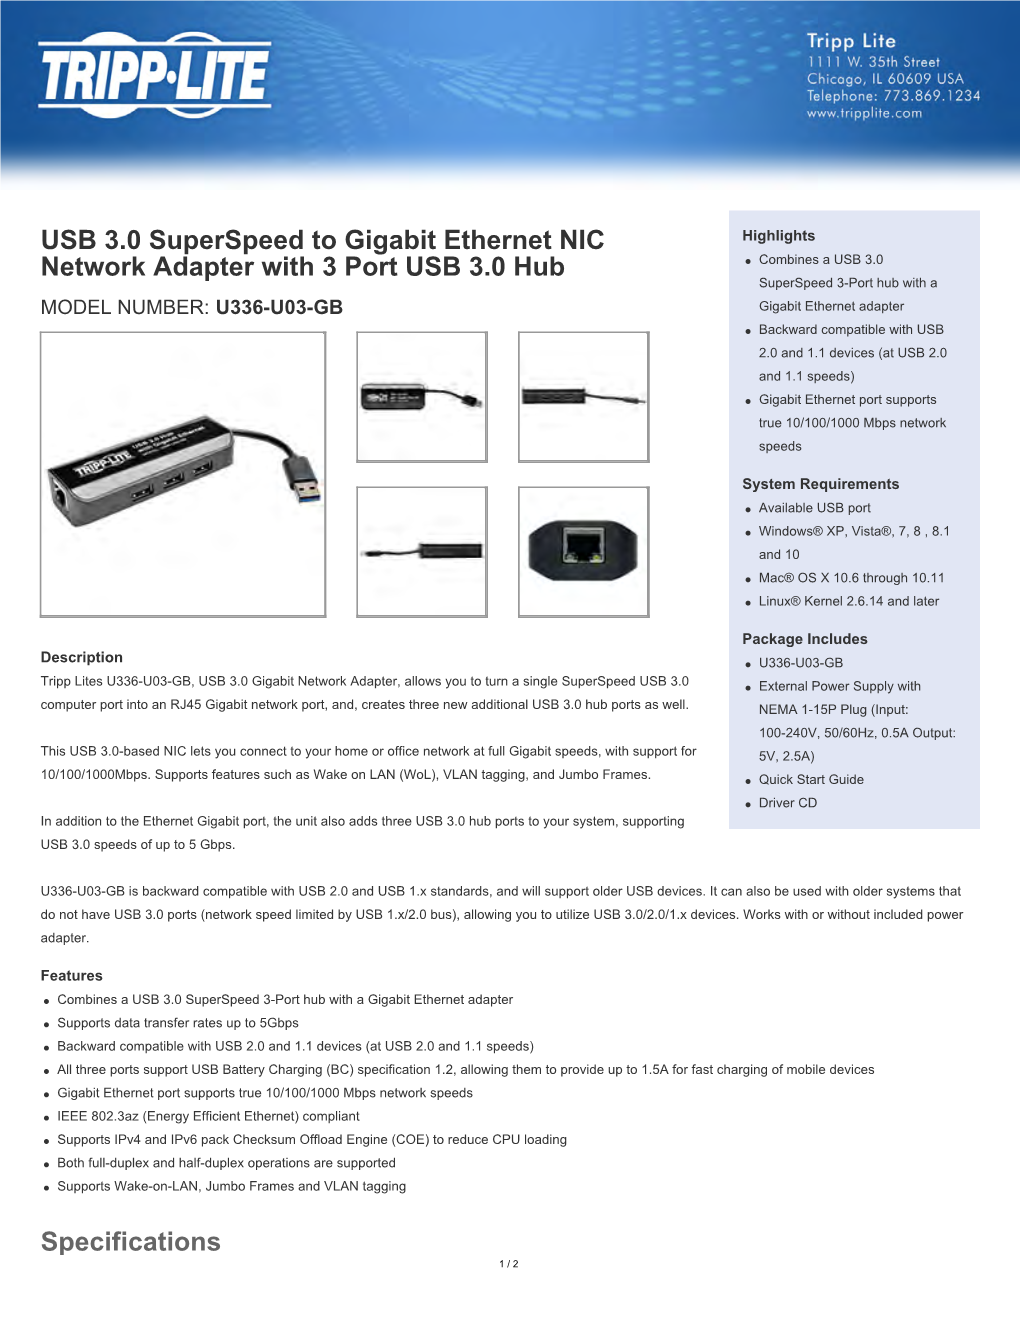 USB 3.0 Superspeed to Gigabit Ethernet NIC Network